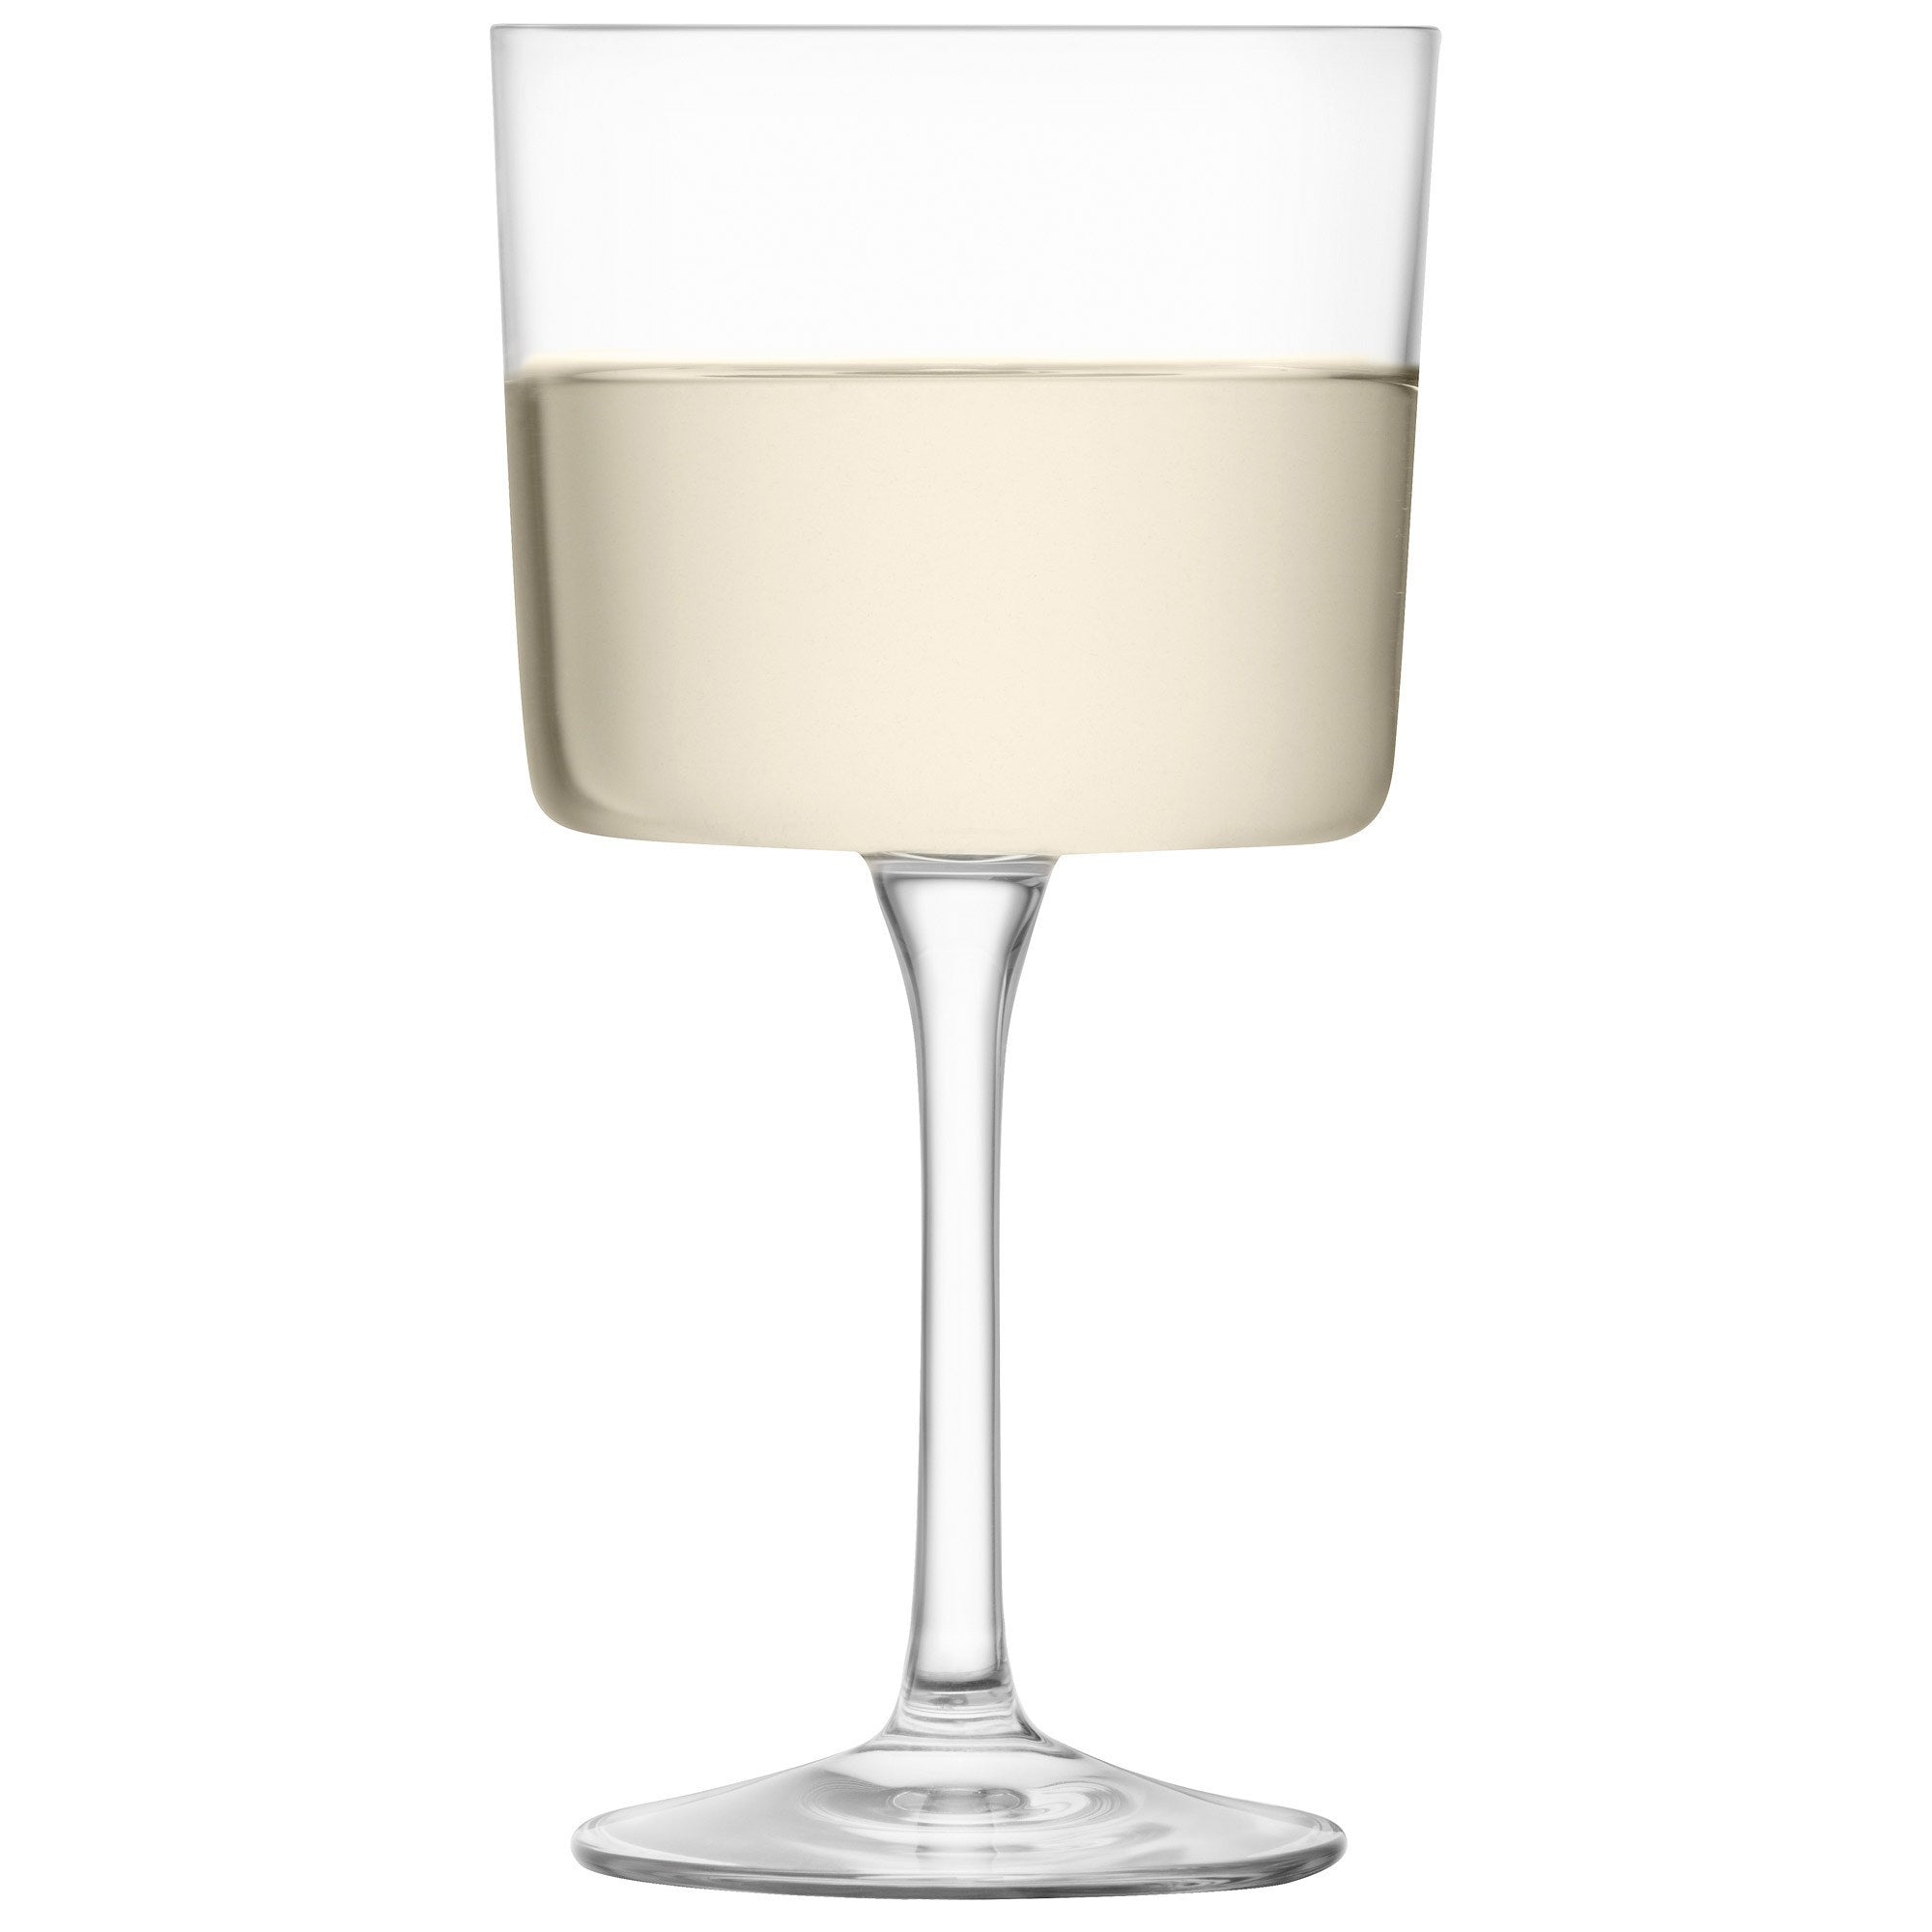 Gio Wine Glasses - Set of 4